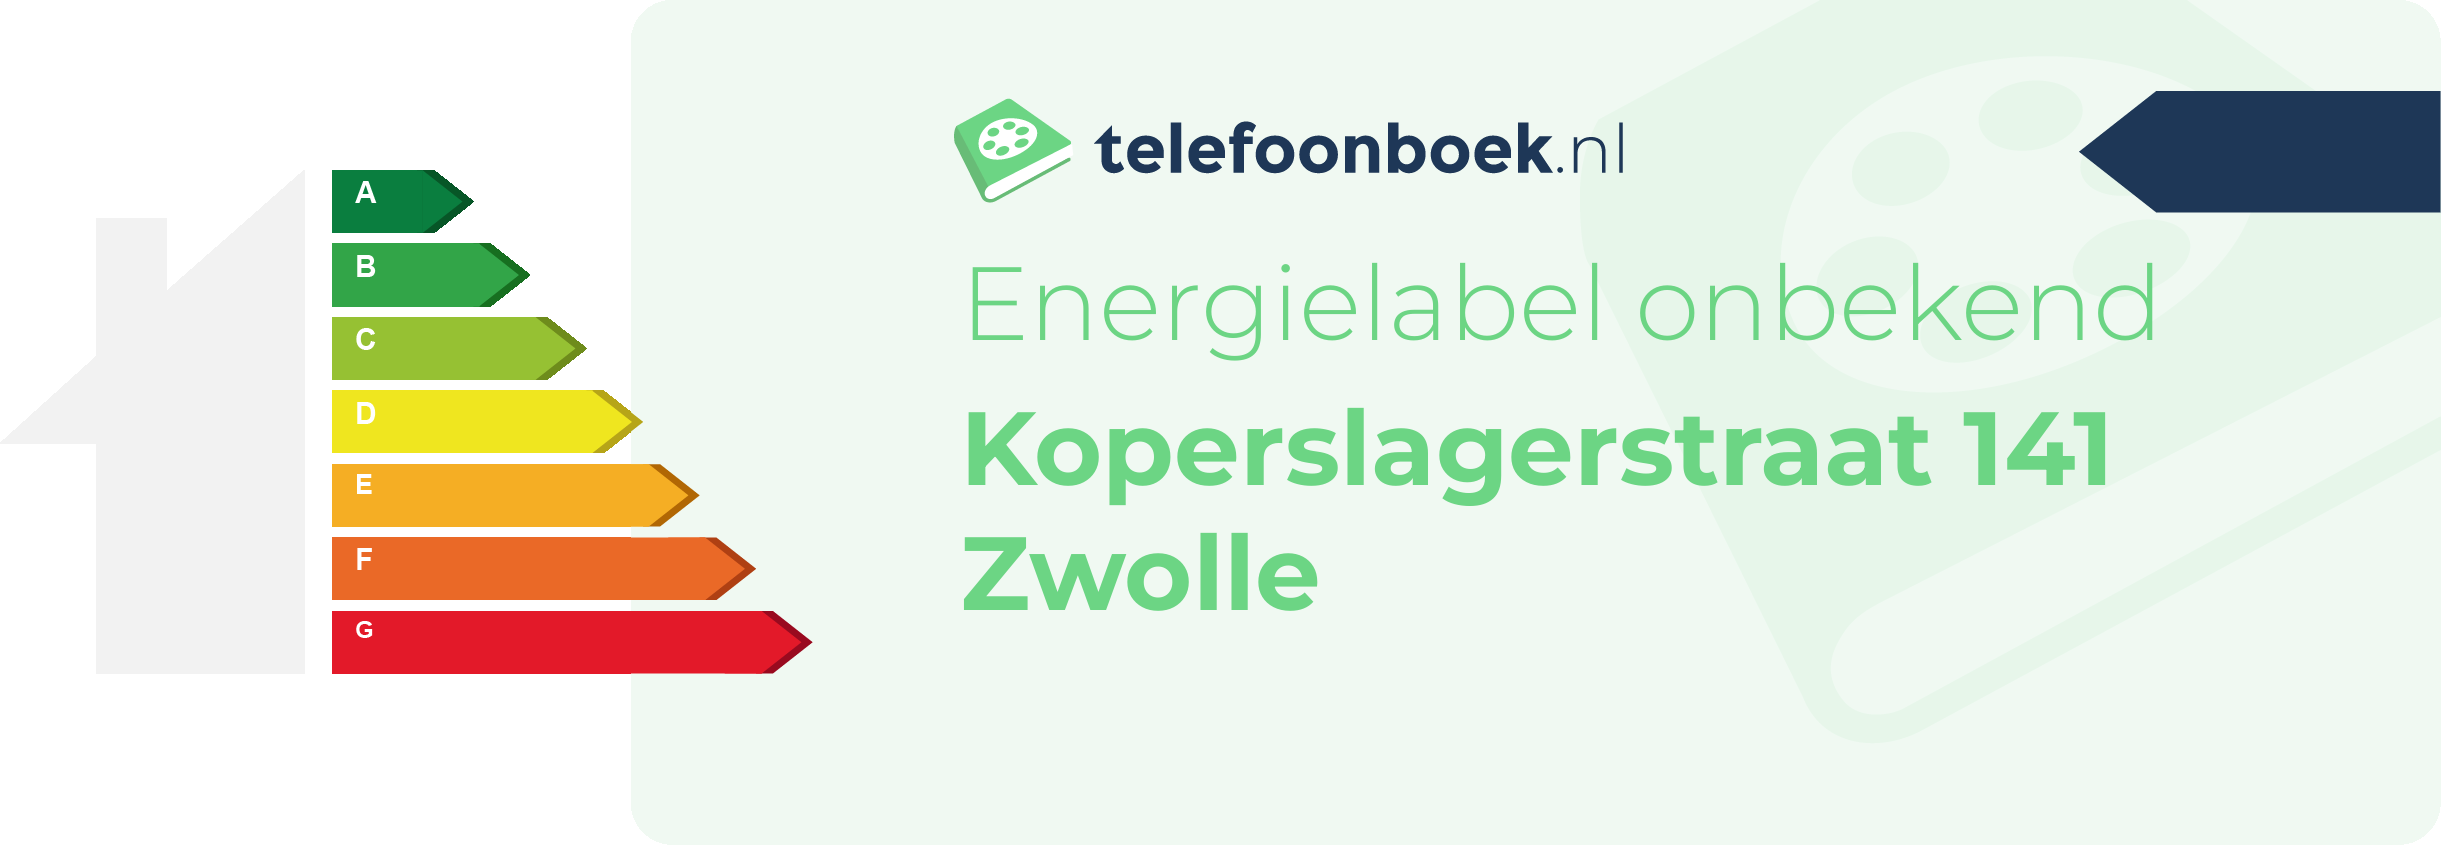 Energielabel Koperslagerstraat 141 Zwolle